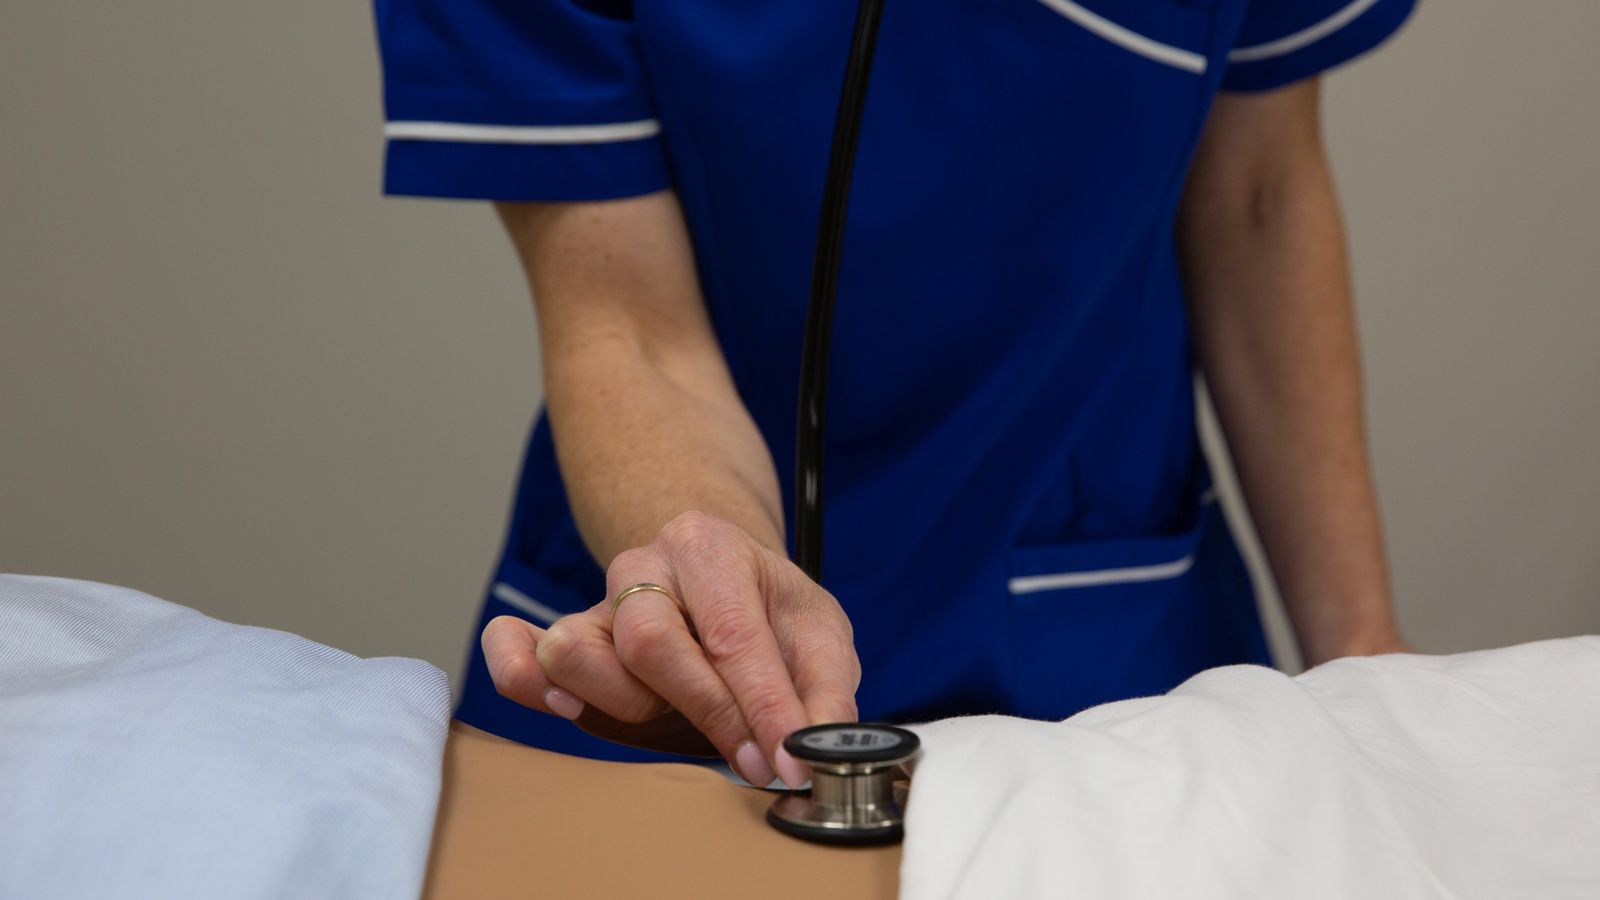 A nurse using a stethoscope on somebody's stomach